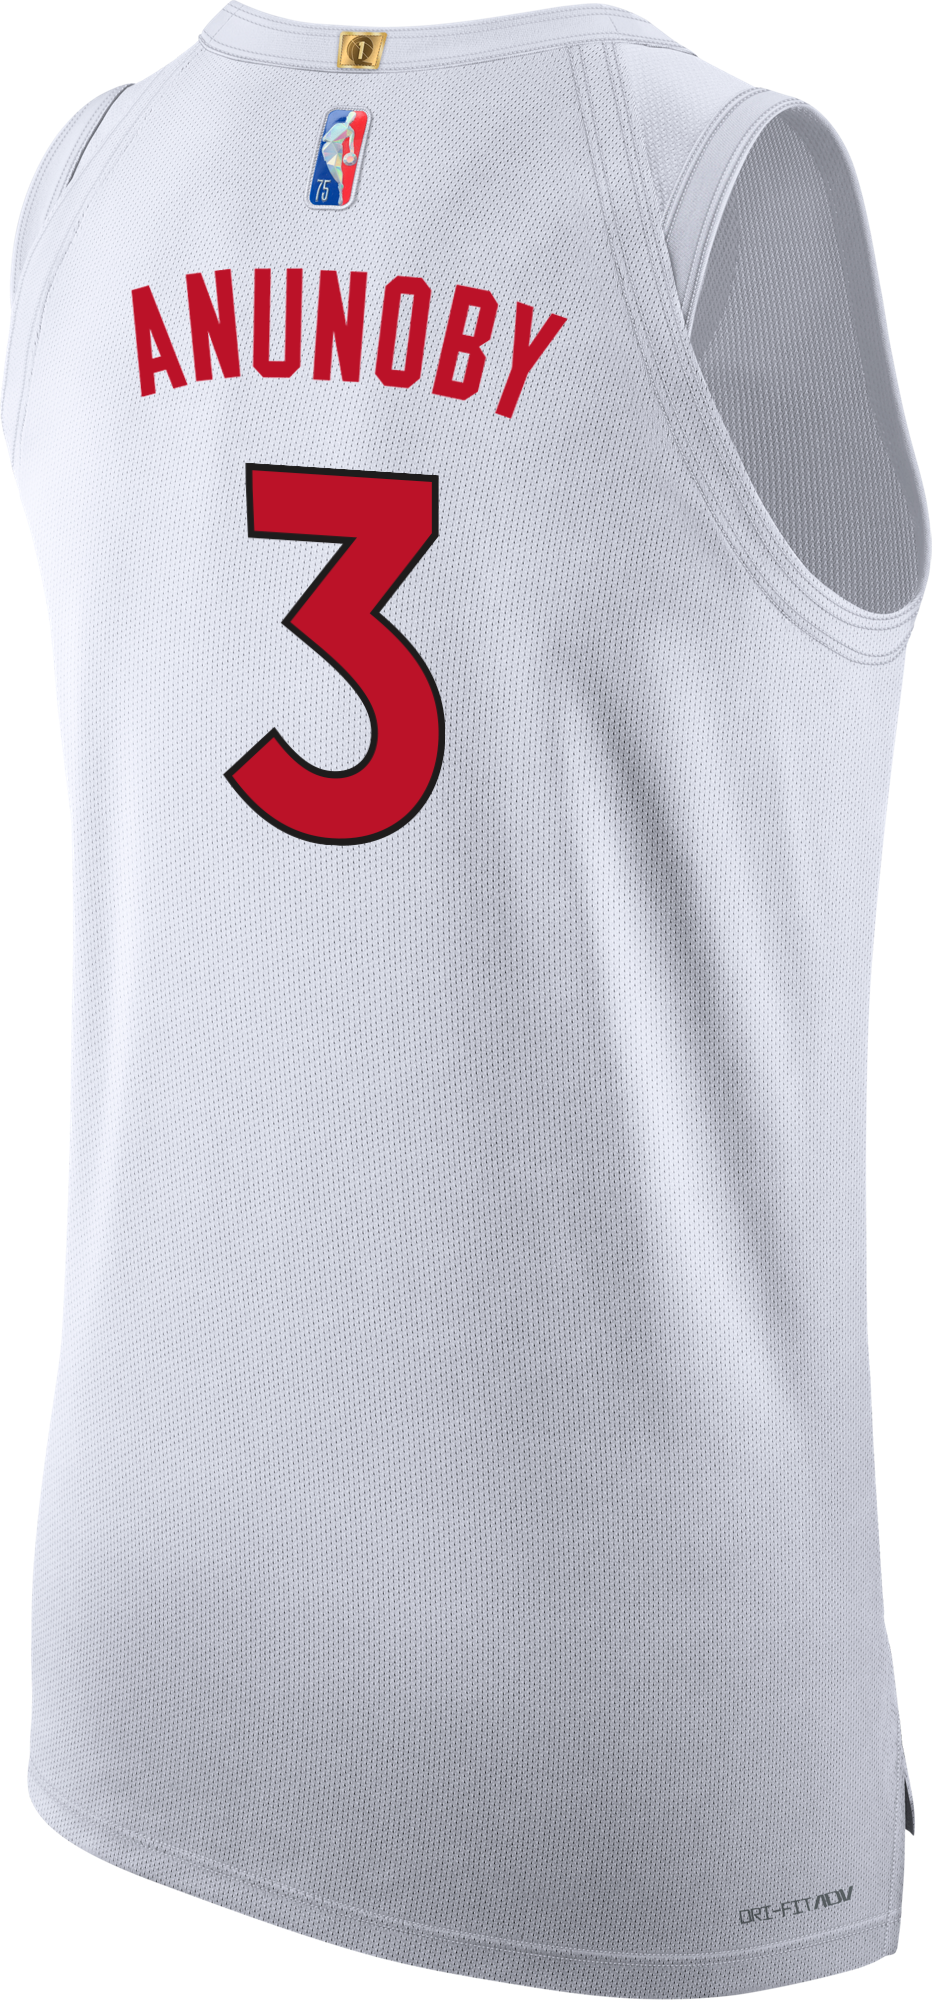 Nike unveils “Earned Edition” jersey for the Raptors - Raptors HQ